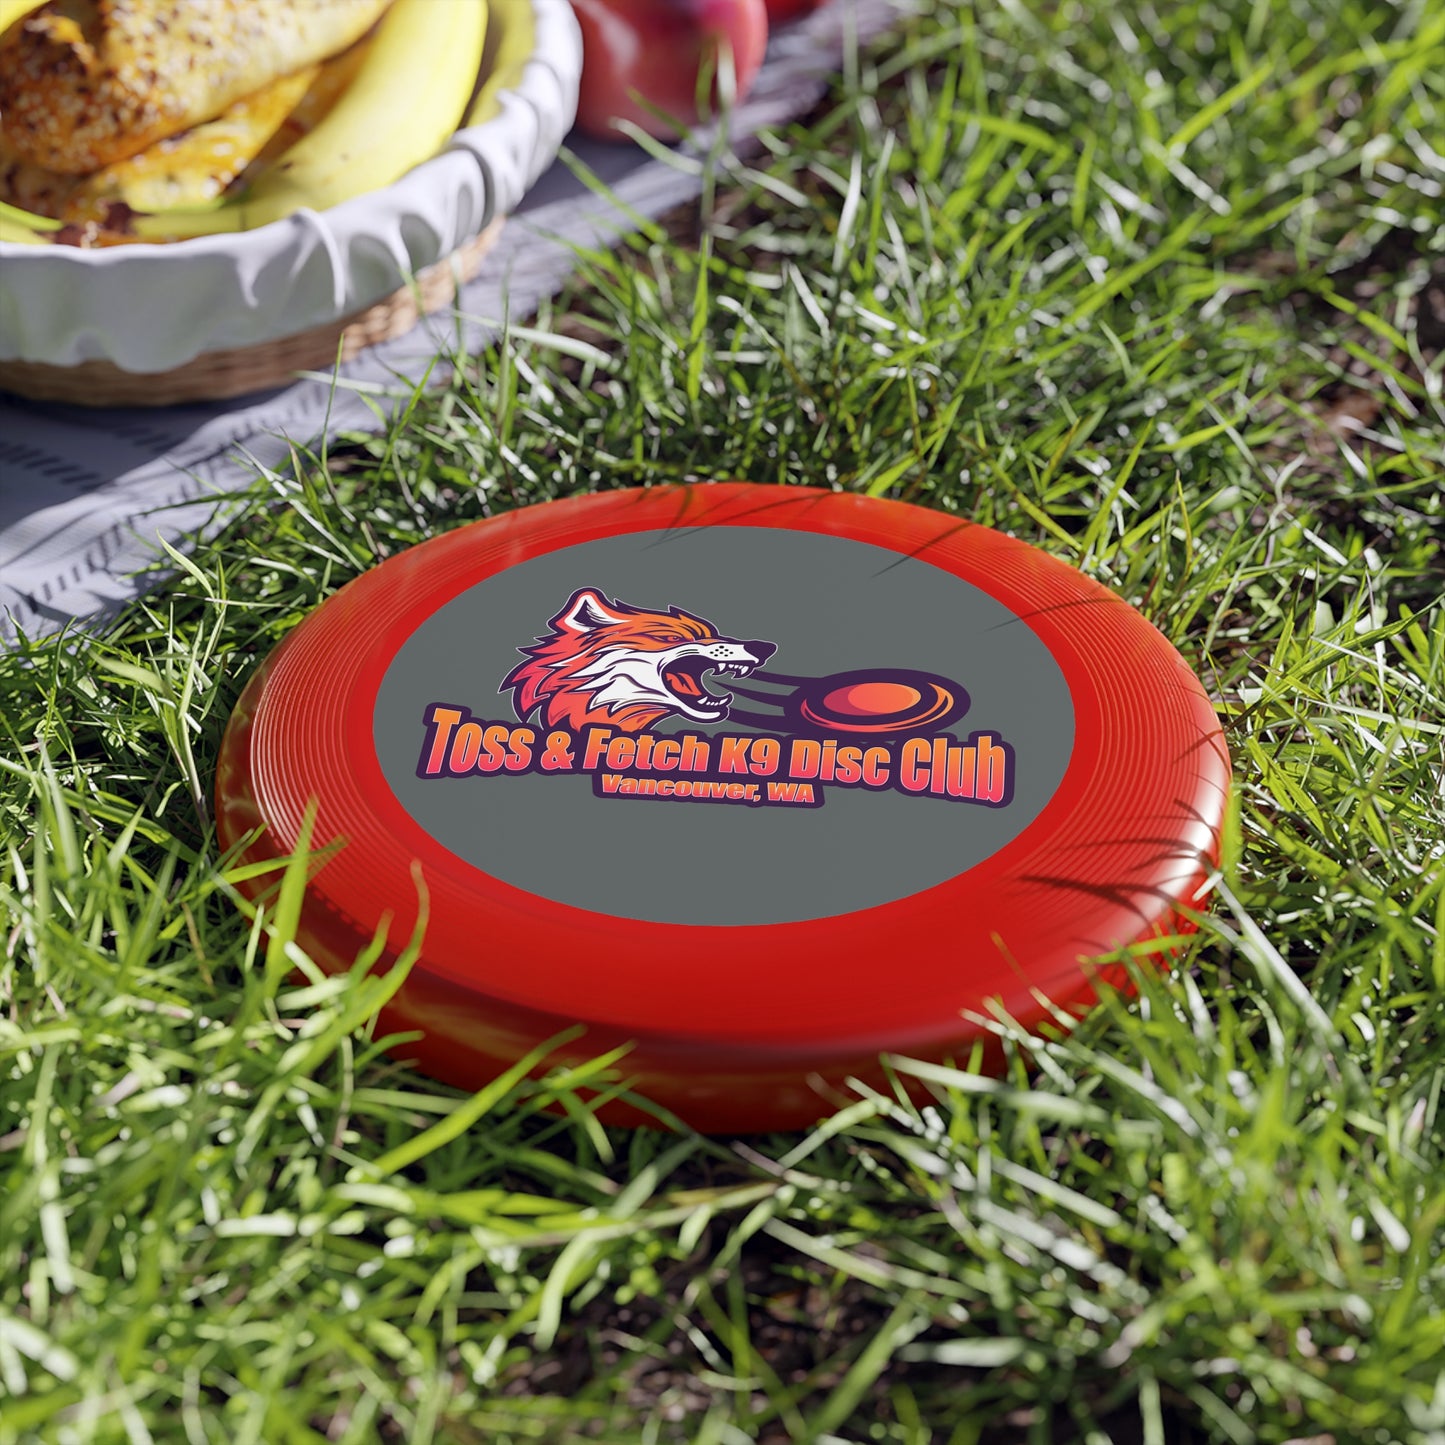 Toss & Fetch - Vancouver, WA Wham-O Frisbee